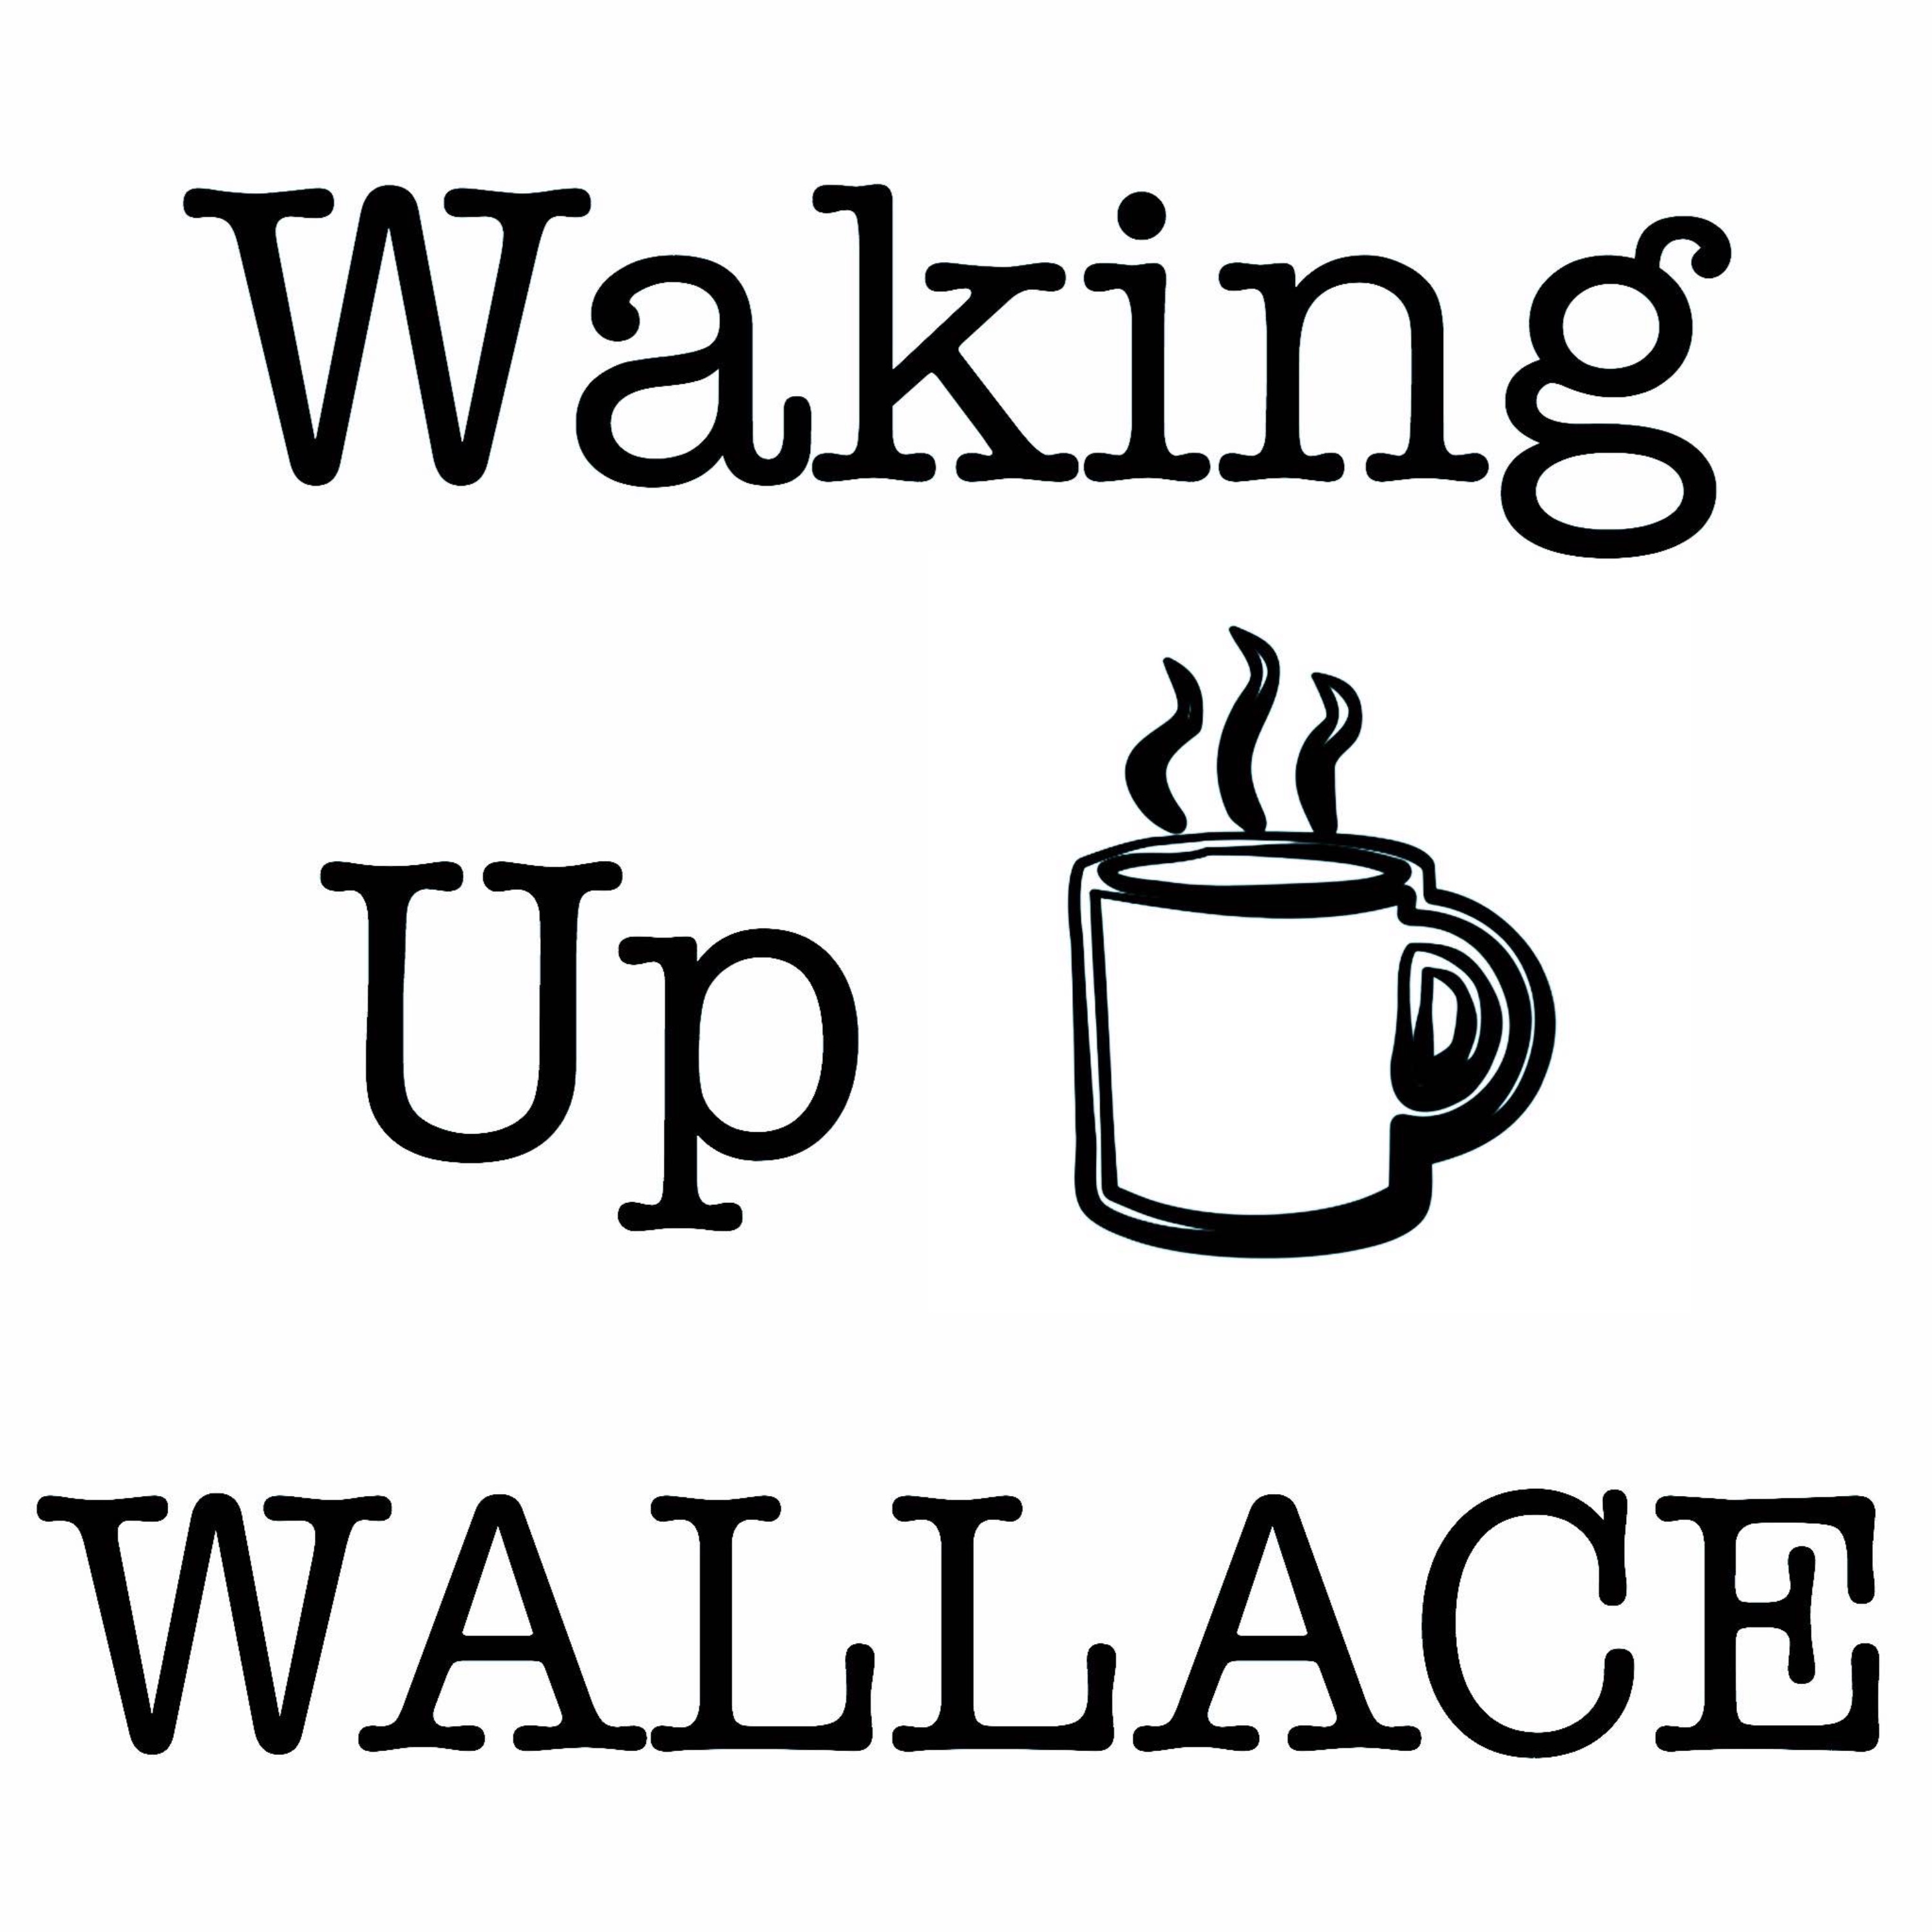 Waking Up Wallace